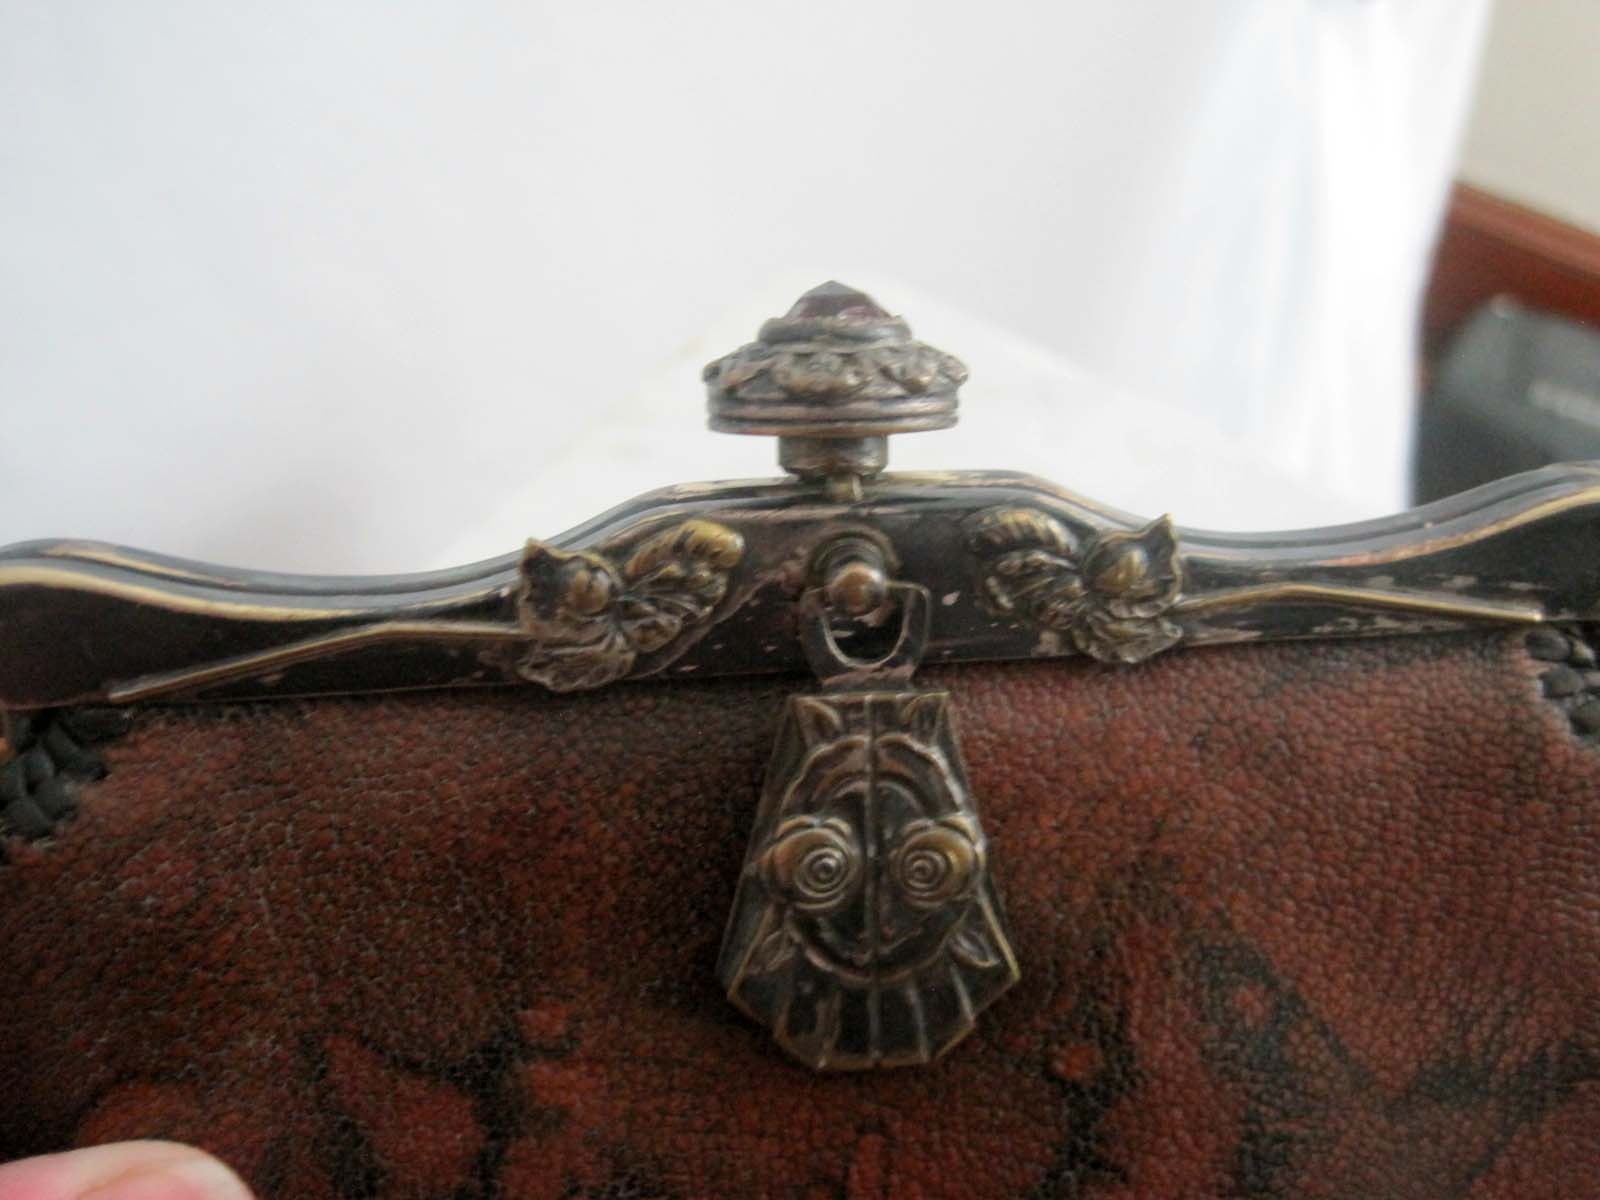 The Elegant | Tote Leather Bag | Spacious Vintage Purse - ClutchToteBags.com